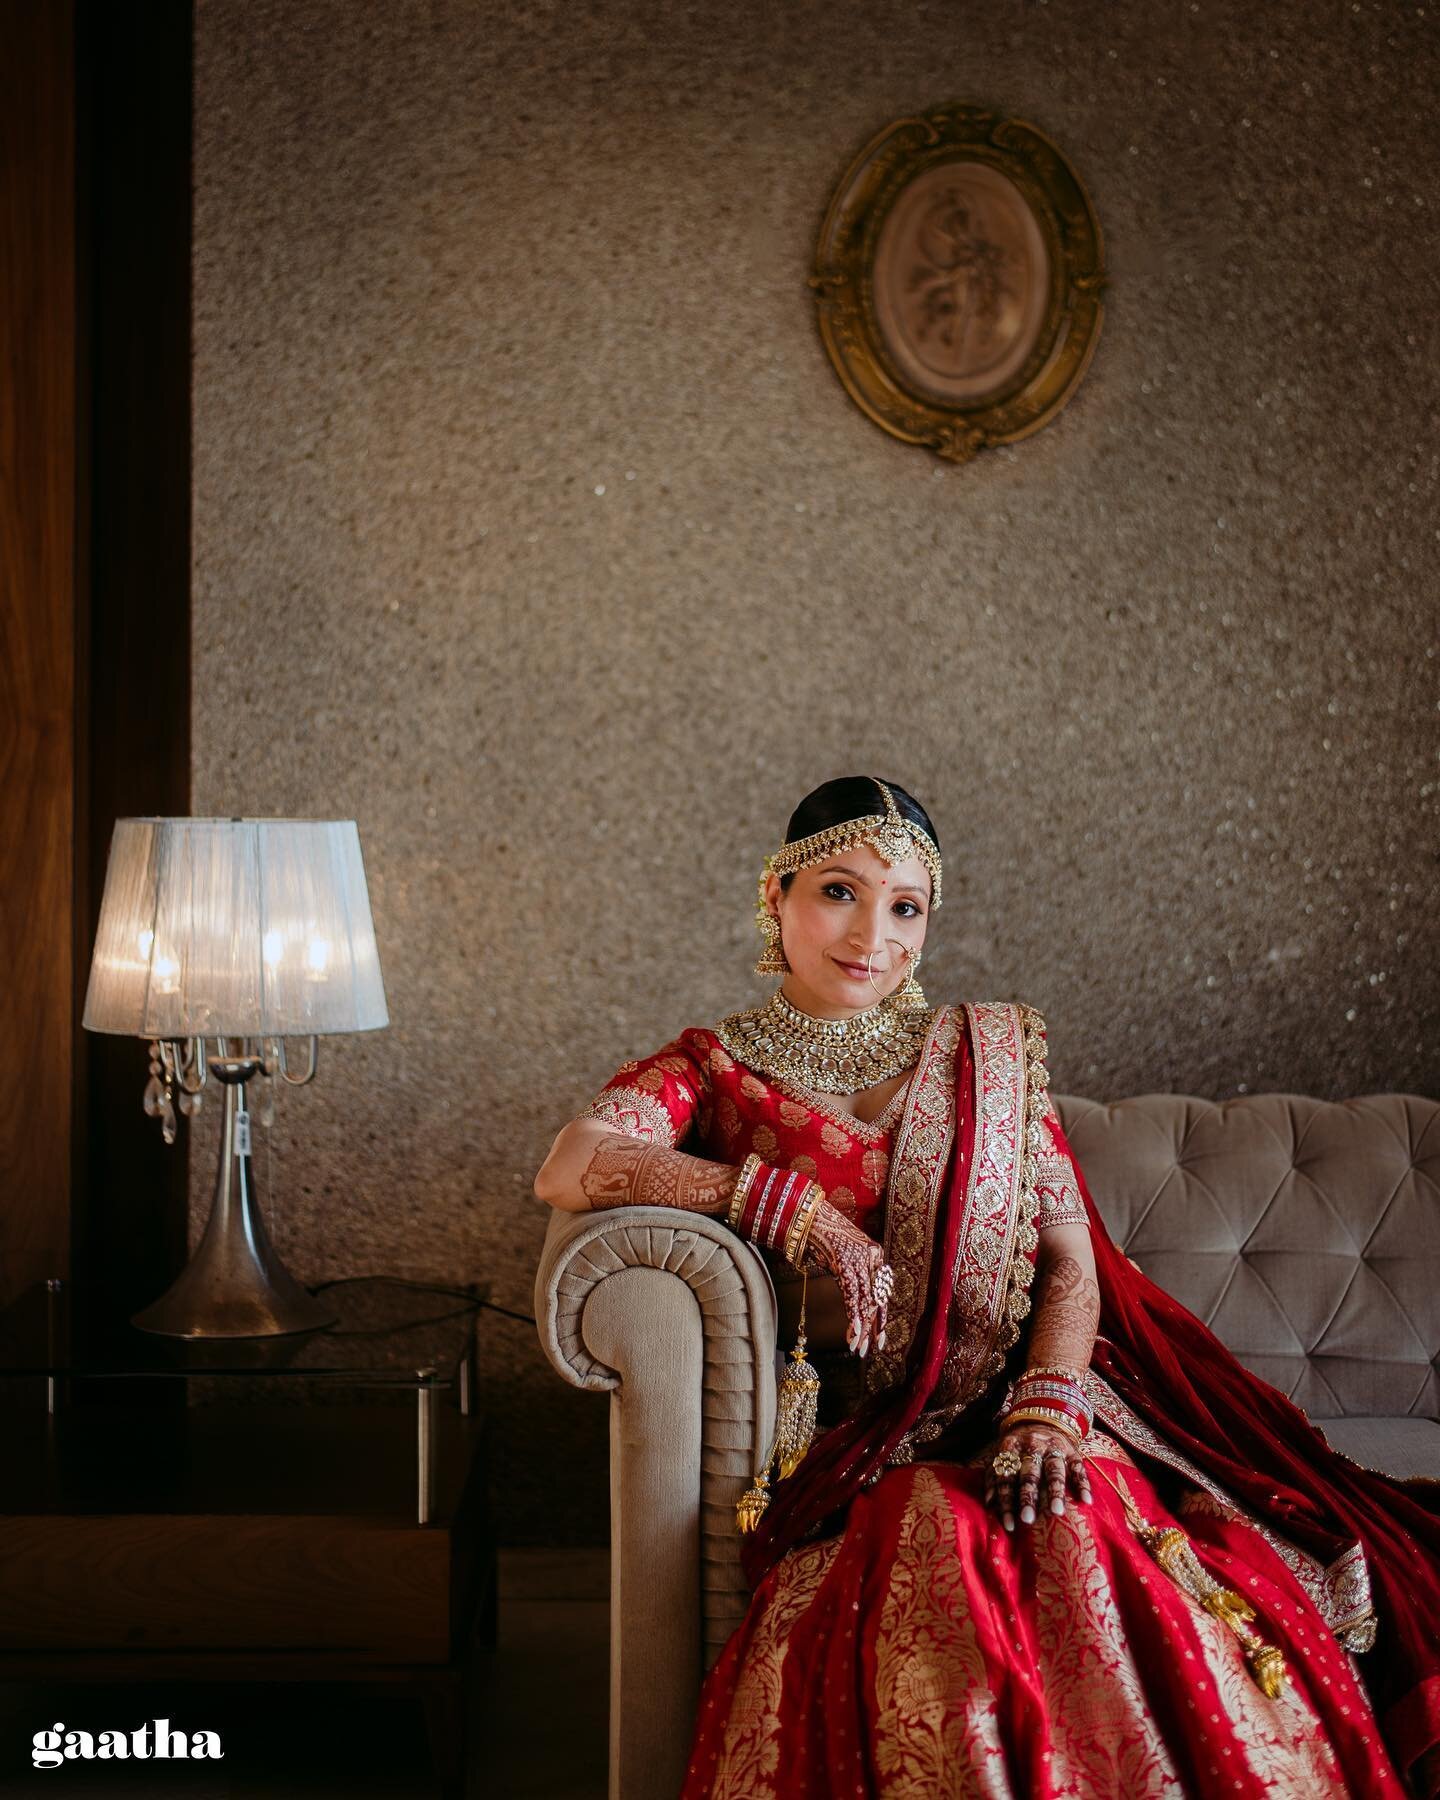 Kritika killing it on her wedding day. 
@kritzz25 

Photographed by @_rachanakaar_ for @gaatha.co.in 

#bridesofgaatha #bride #bridalphotography  #weddingphotographer #portraitphotography #forever #colour #junebugweddings  #instagram #instawedding#br